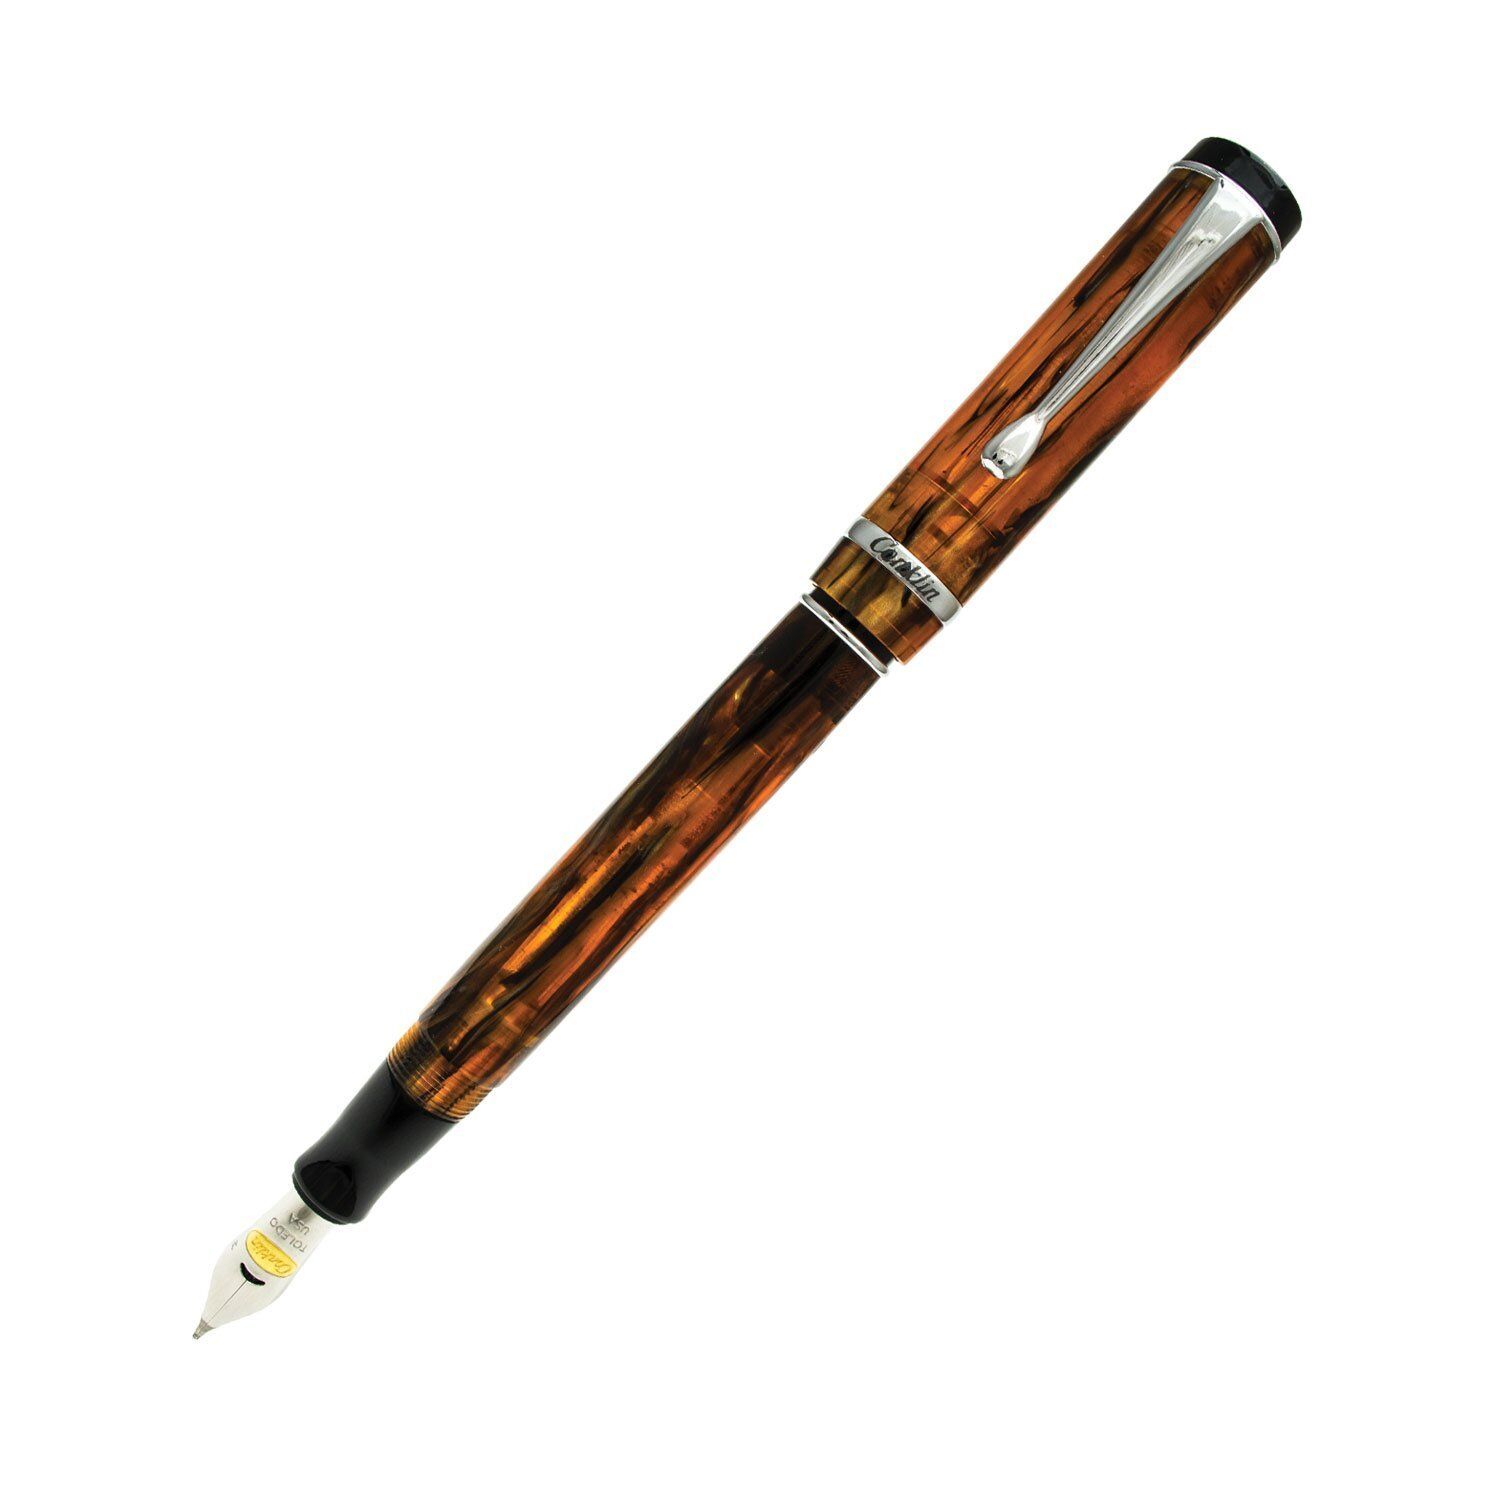 Conklin Duragraph Fountain Pen - Amber - Omniflex Nib CK71346 - New in Gift Box